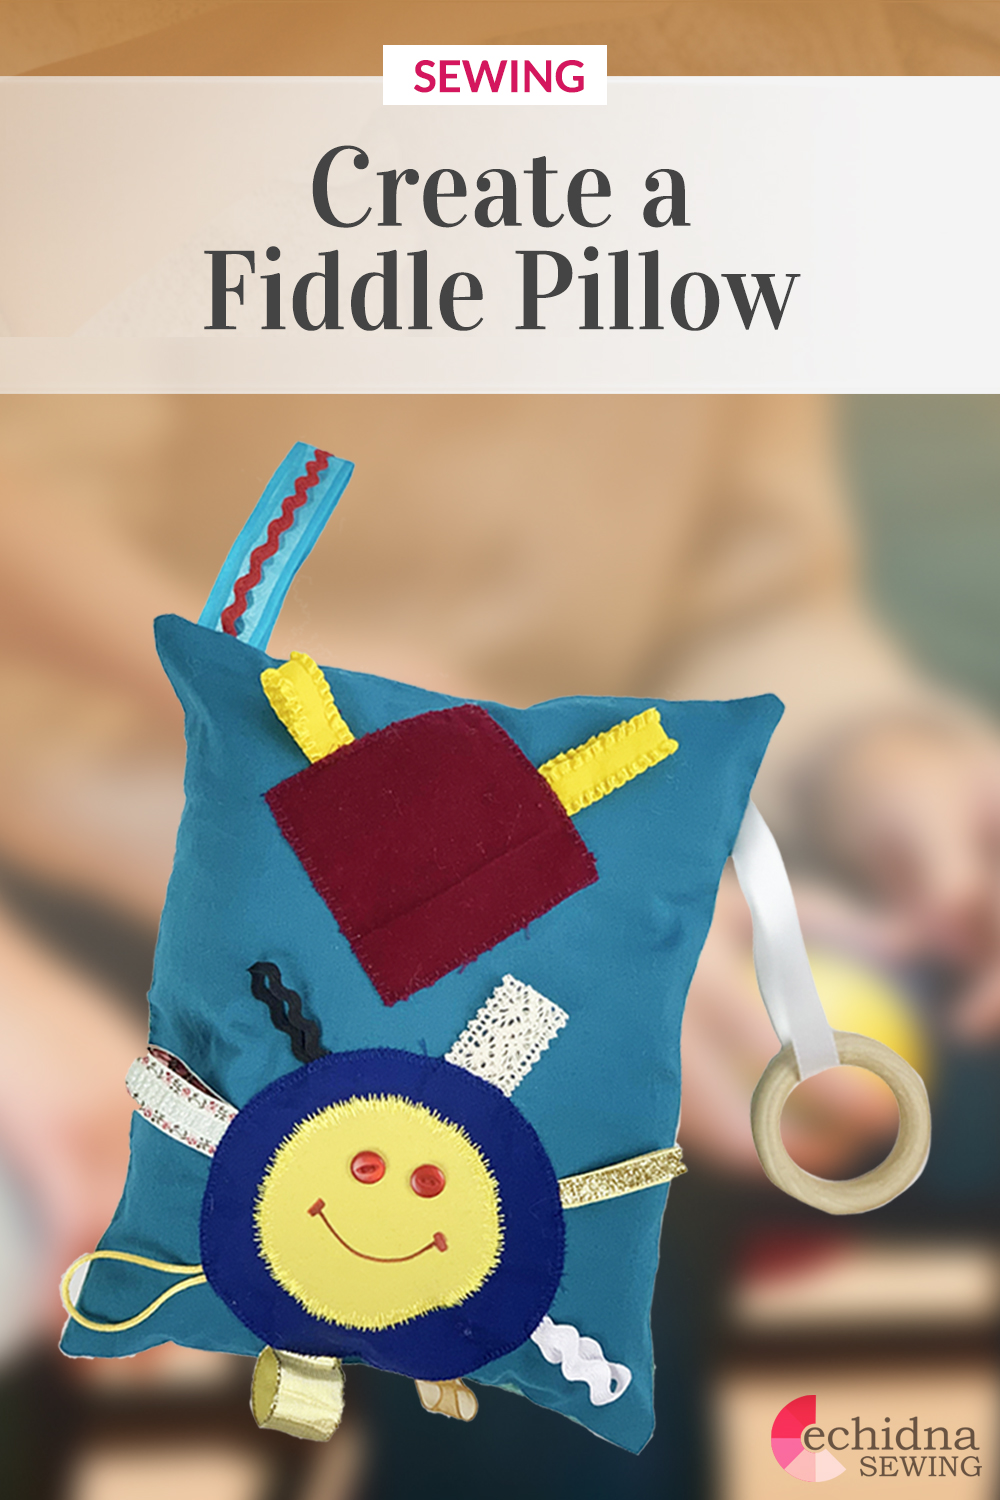 Fiddle-pillow